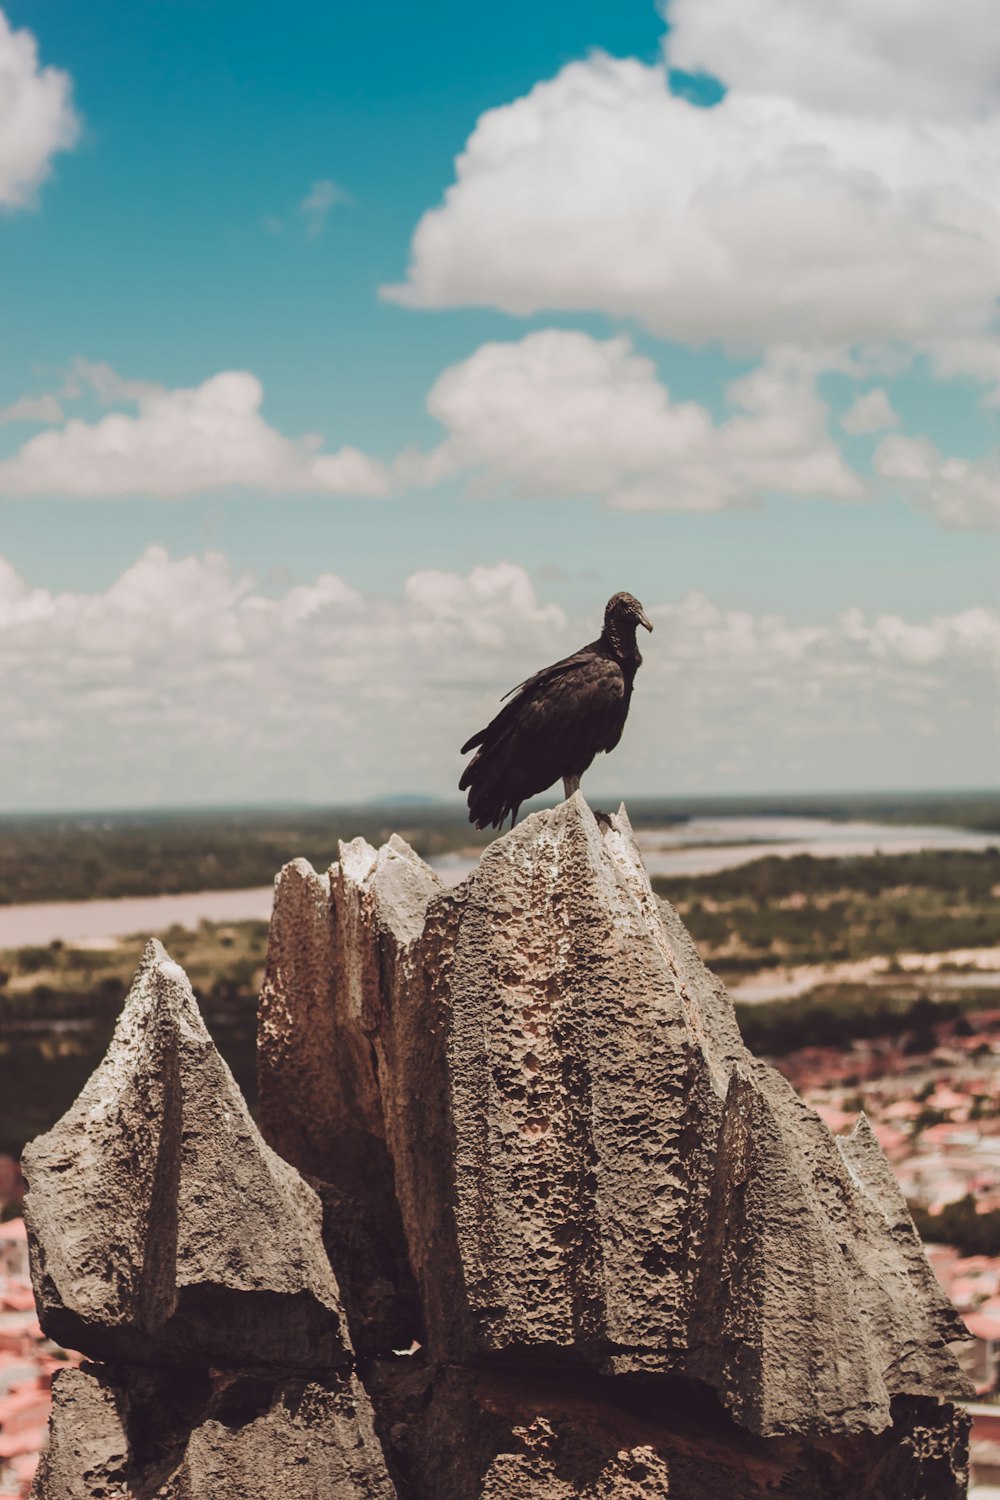 black bird on brown rock formation during daytime